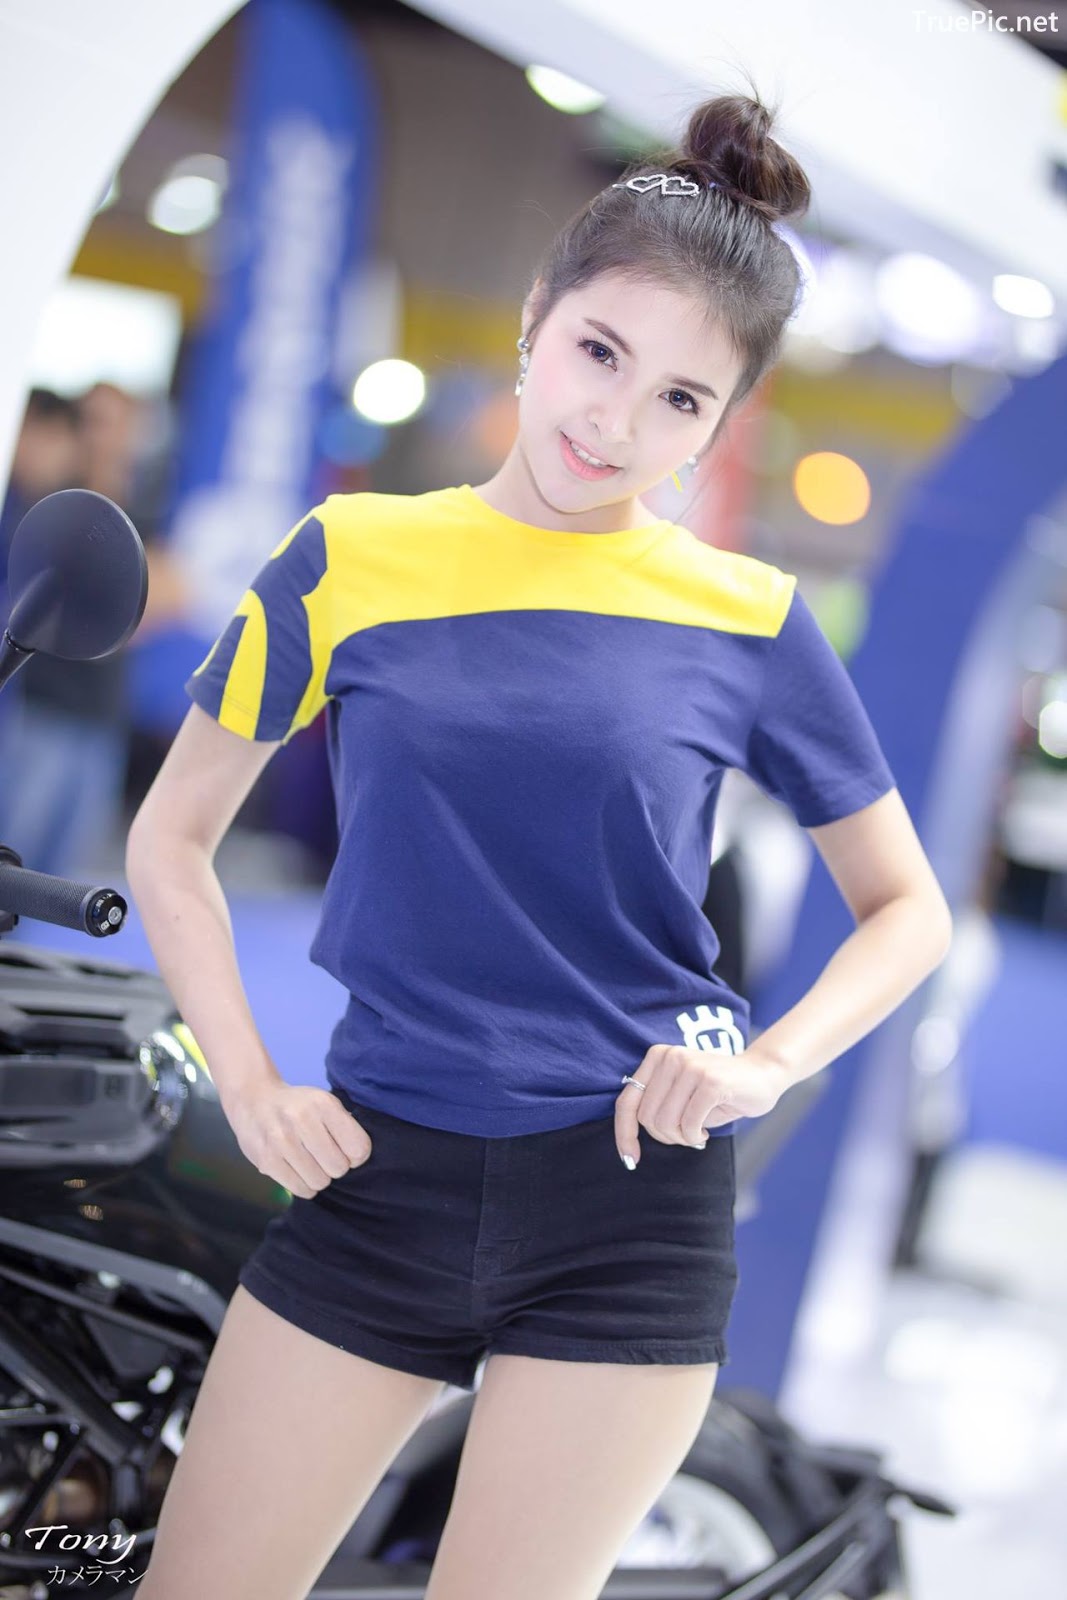 Image-Thailand-Hot-Model-Thai-Racing-Girl-At-Big-Motor-2018-TruePic.net- Picture-41